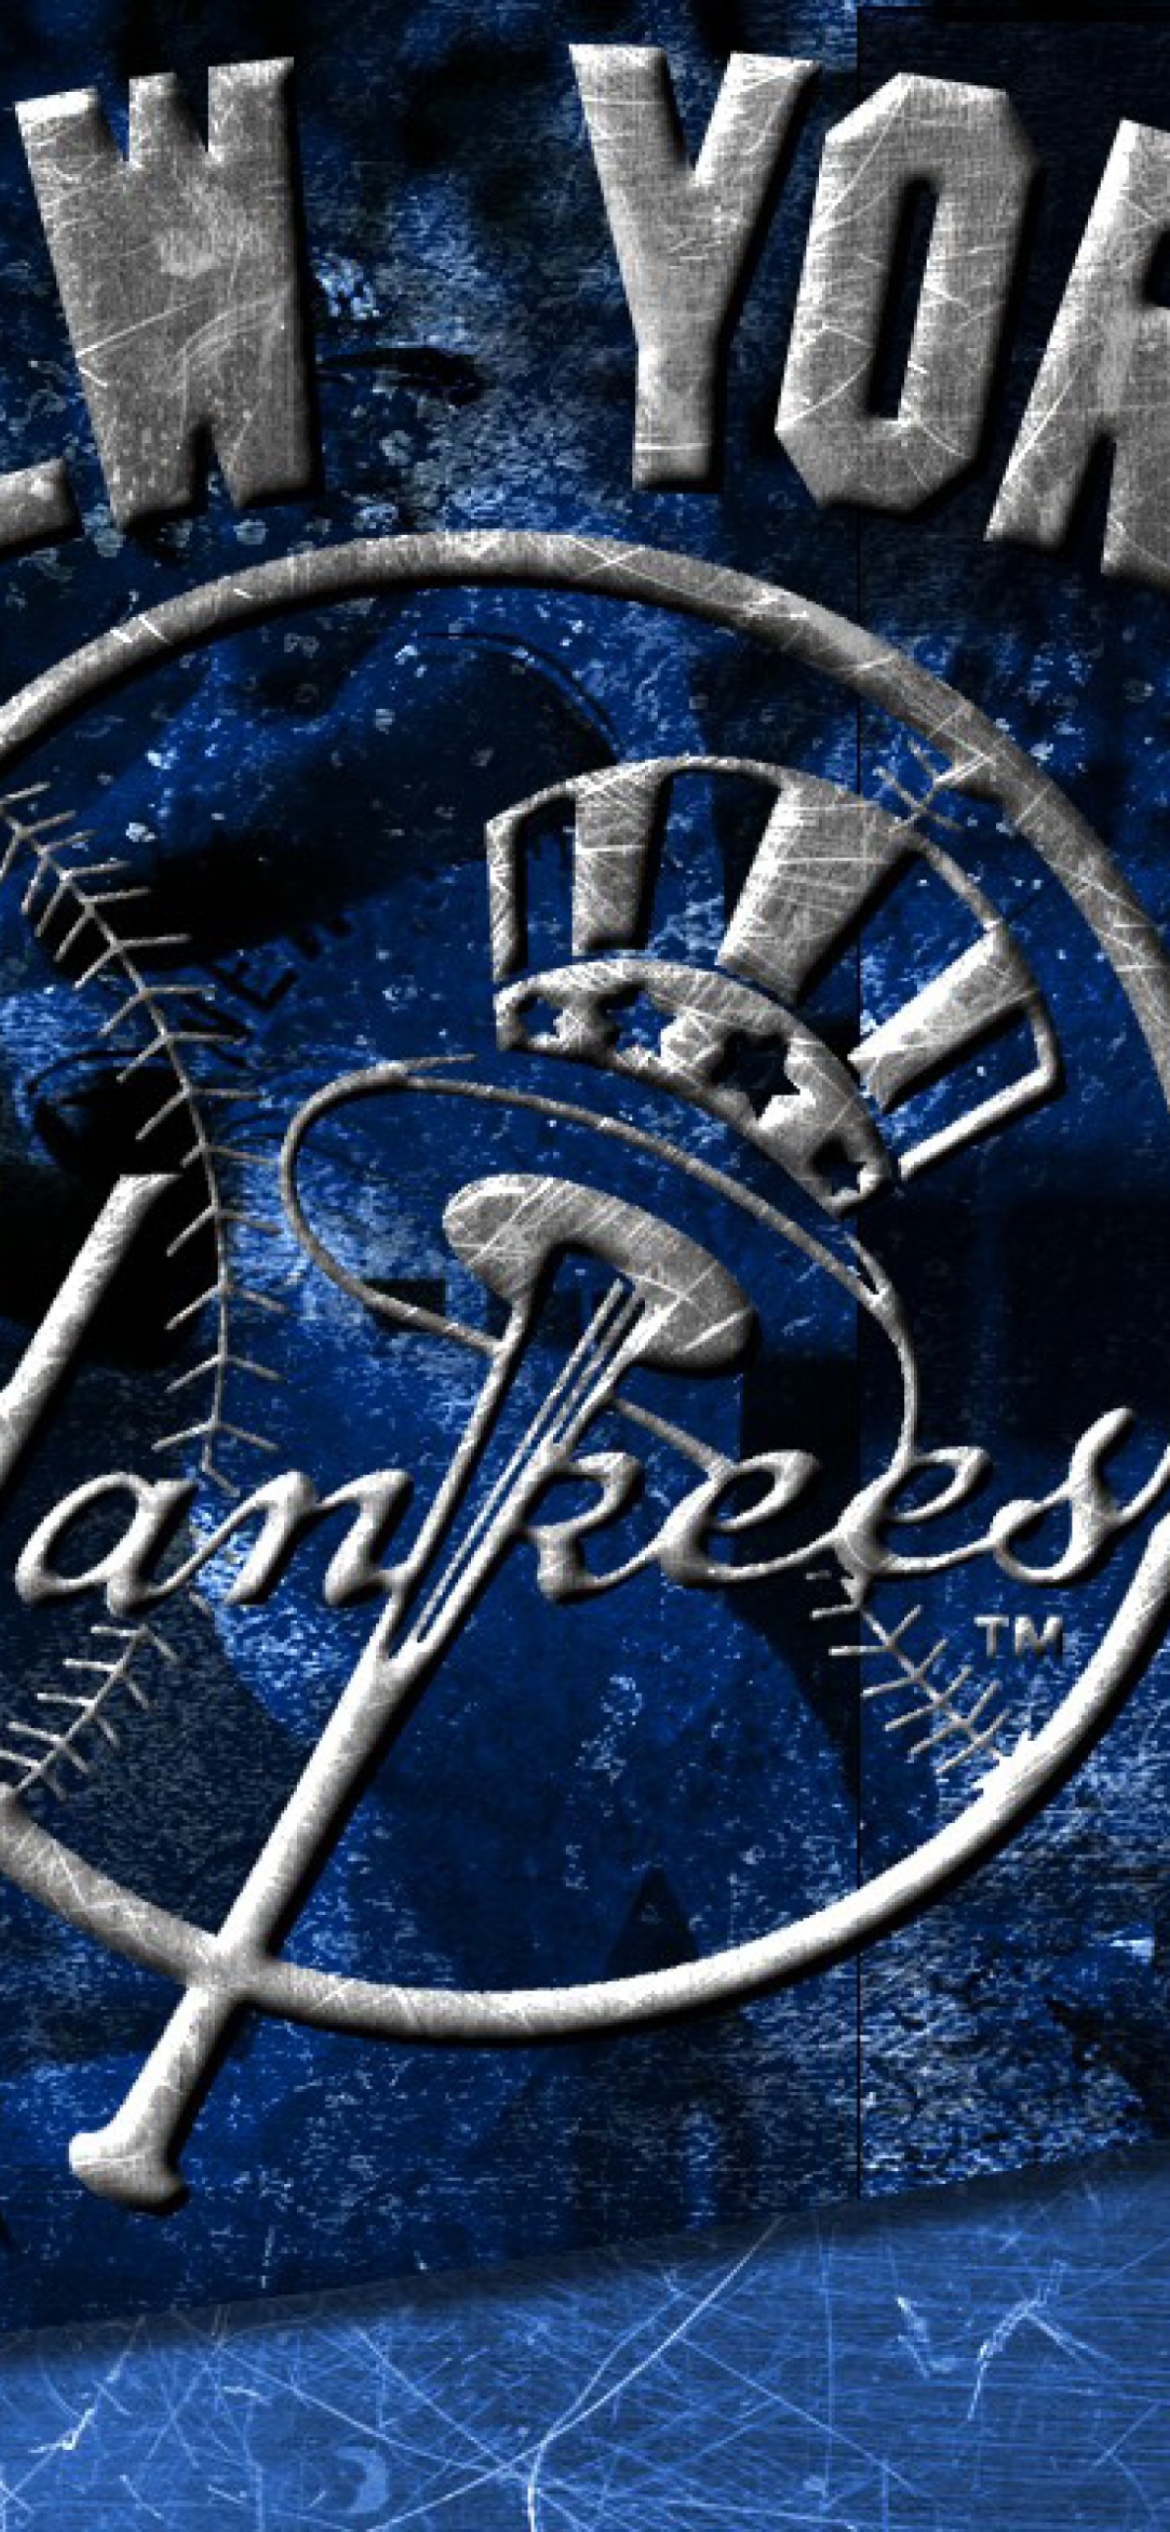 View Larger Image New York Yankees iPhone Wallpaper Logo